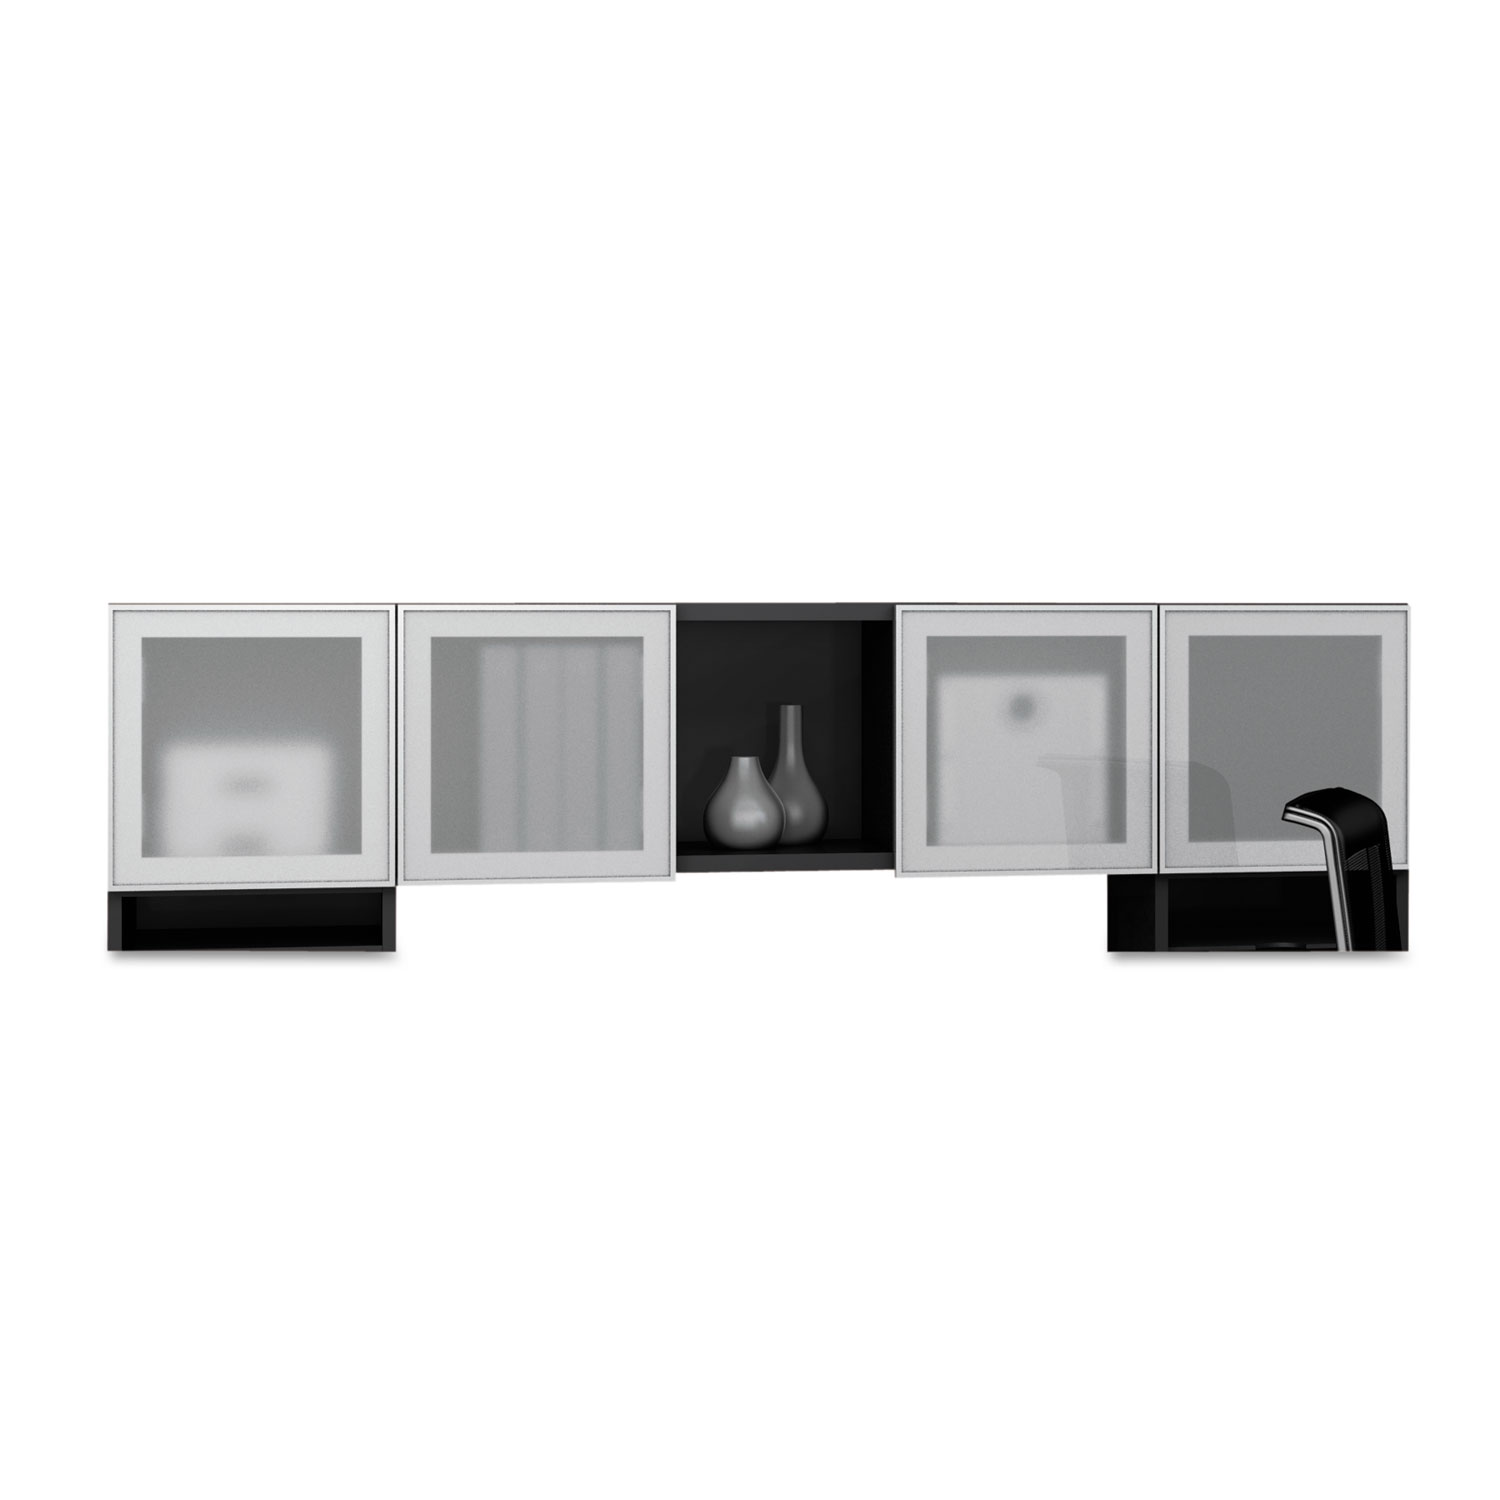  Safco EZH72FAHB e5 Series Overhead Storage Cabinet, 72w x 15d x 15h, Raven (MLNEZH72FAHB) 